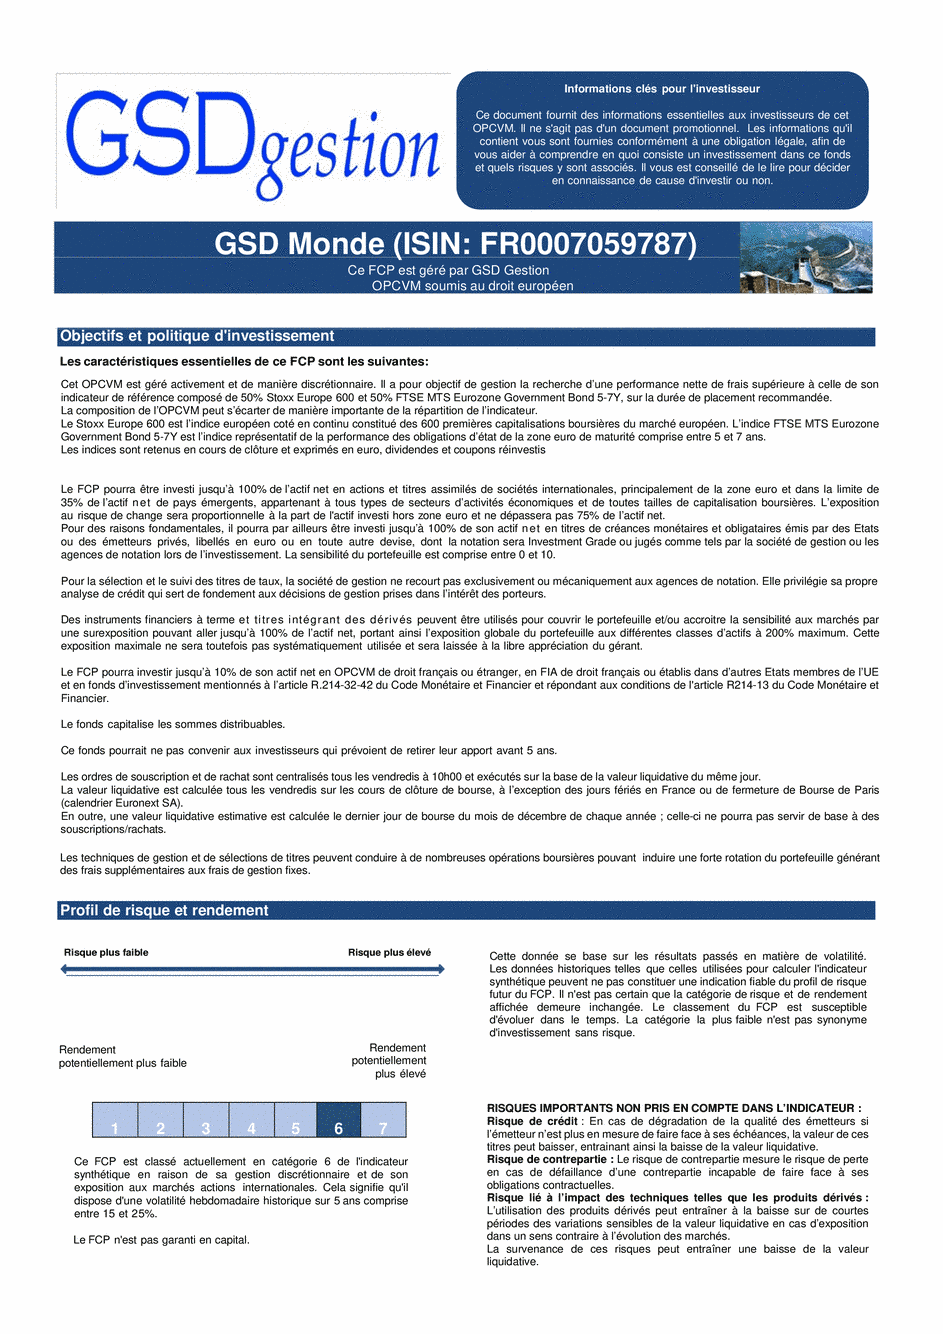 DICI-Prospectus GSD Monde - 21/02/2022 - Français